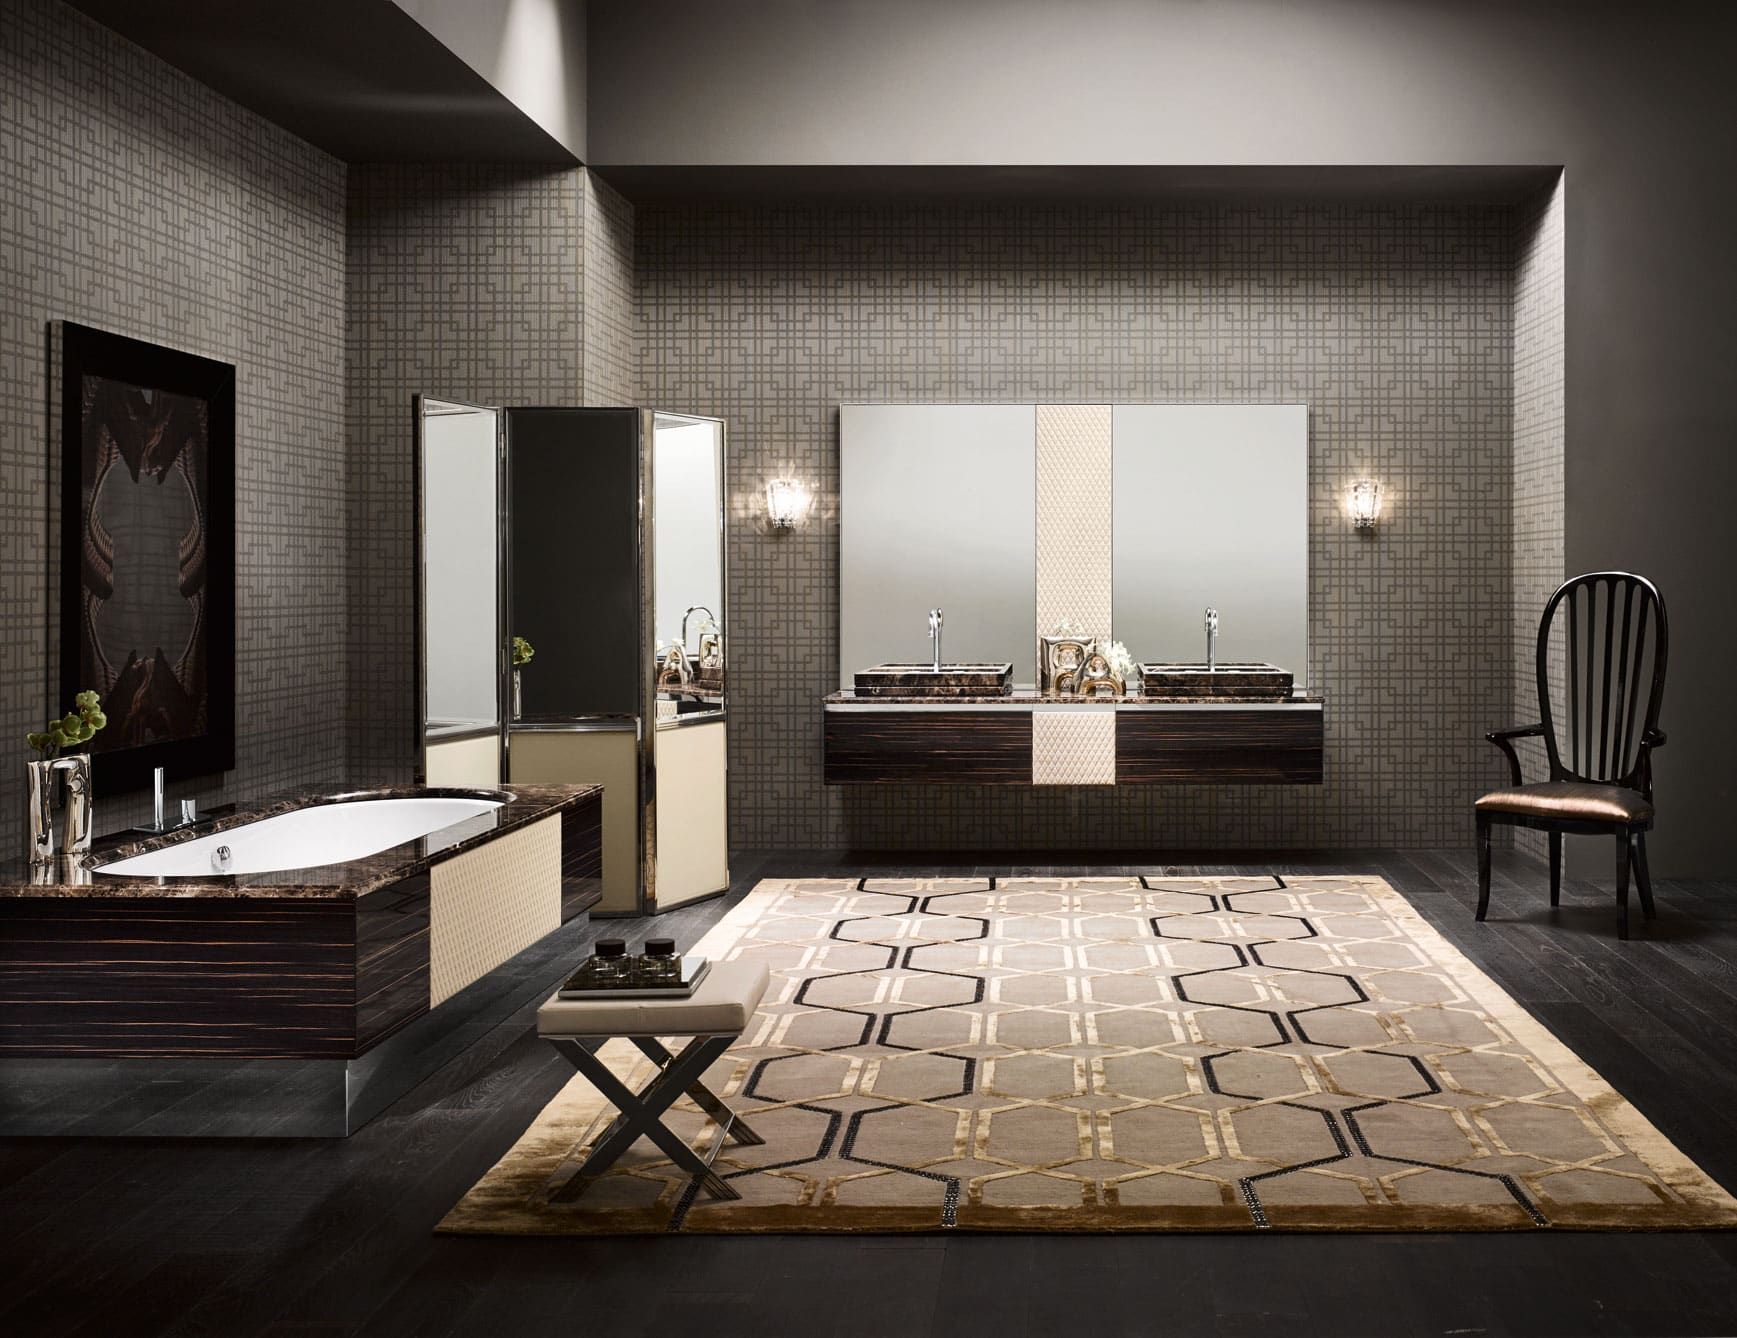 Four Seasons modern Italian bathroom vanity with brown Ebony wood